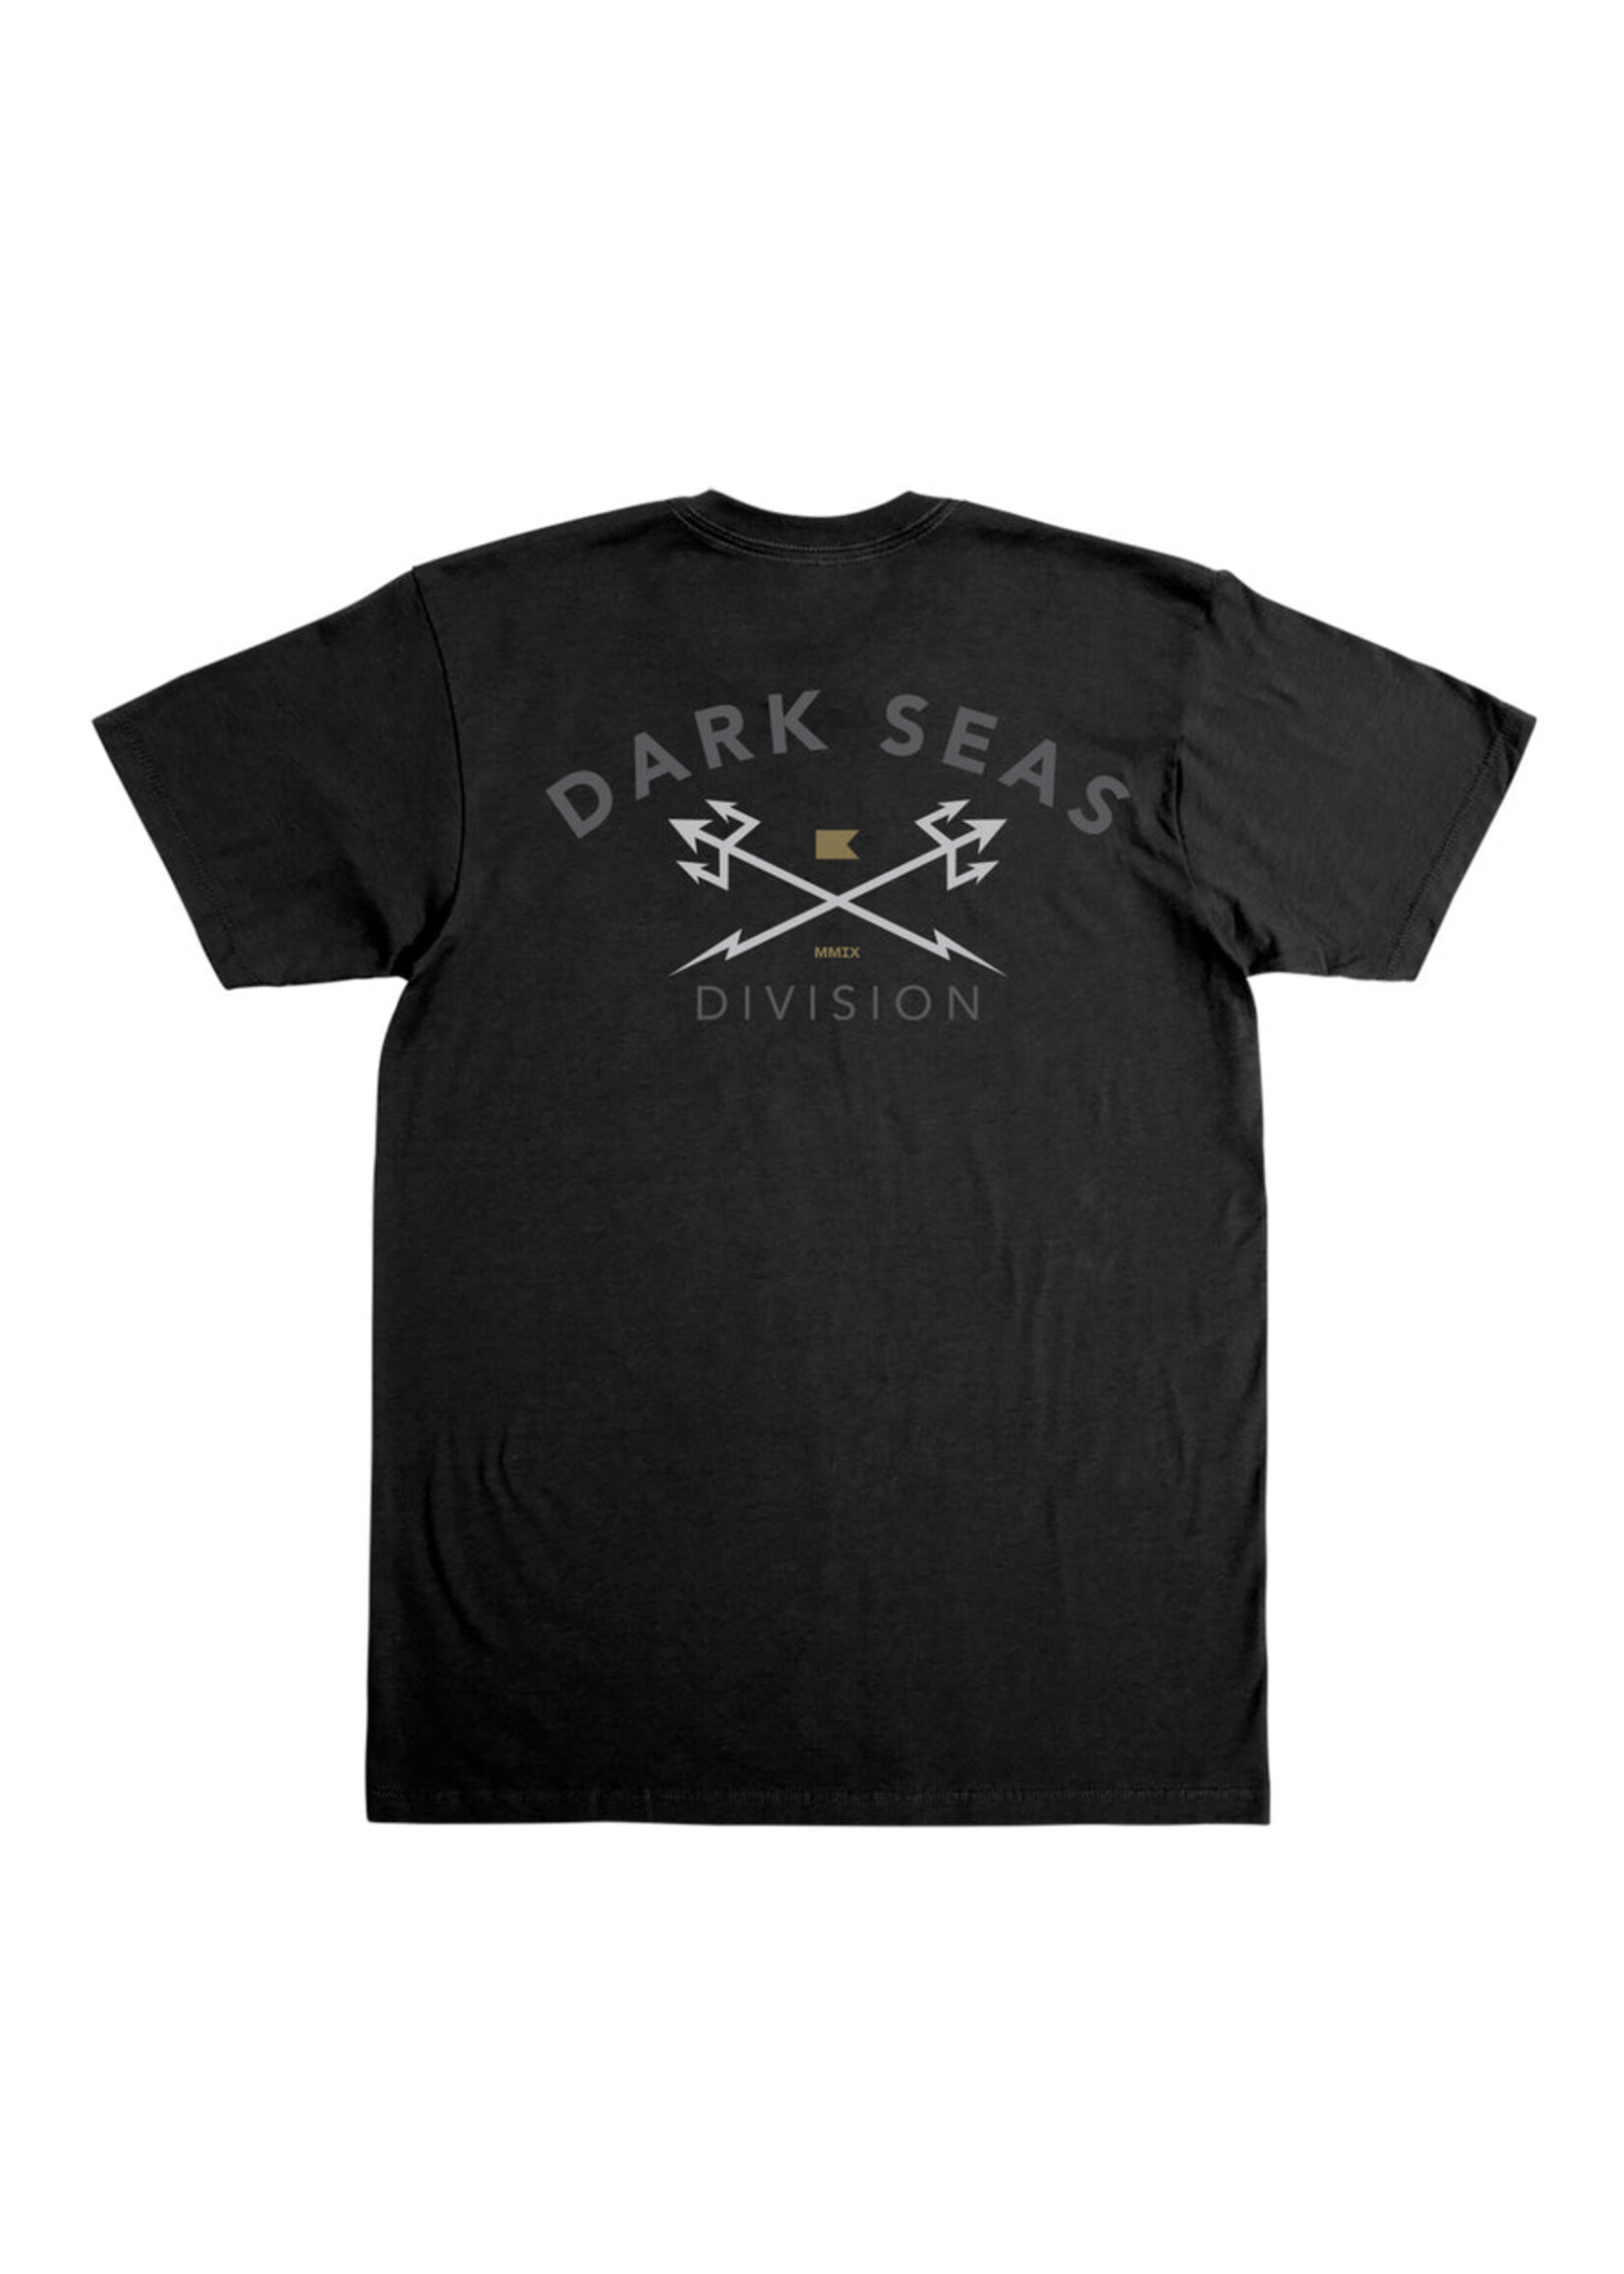 Dark Seas Dark Seas Headmaster Premium Tee